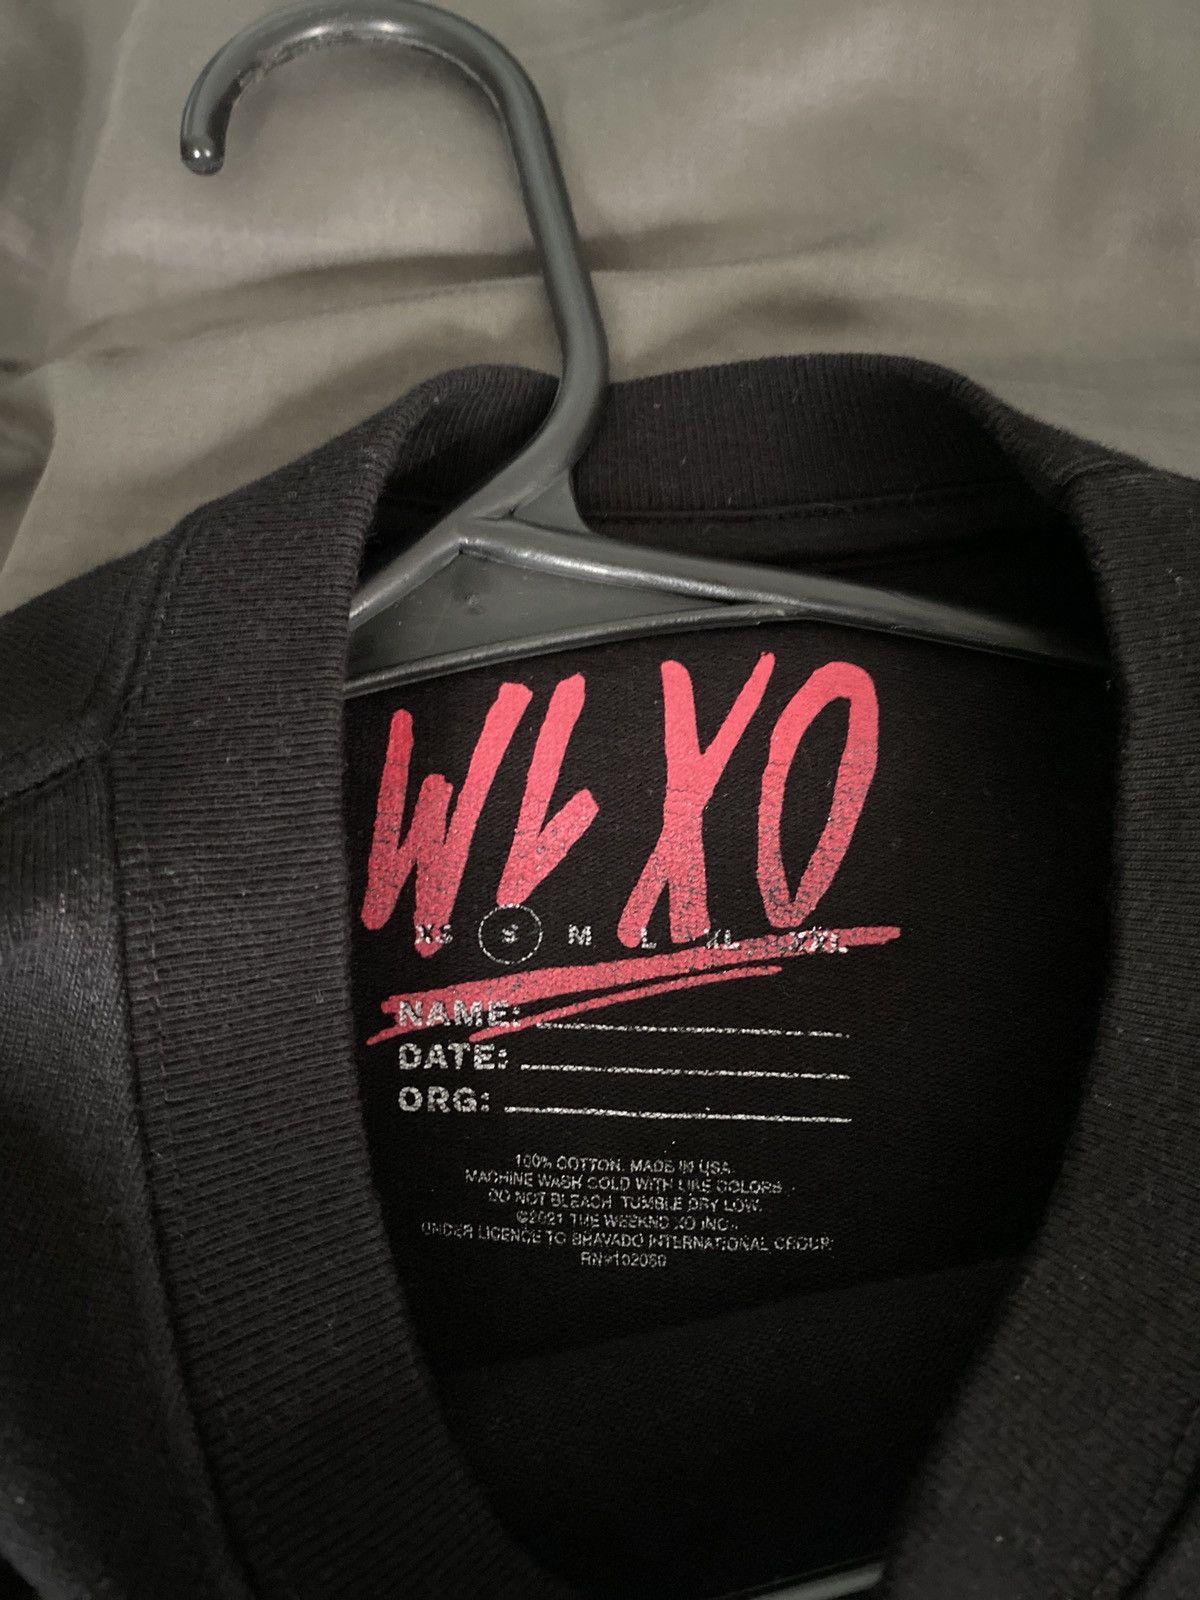 The Weeknd Merchandise on X: XO x Warren Lotas